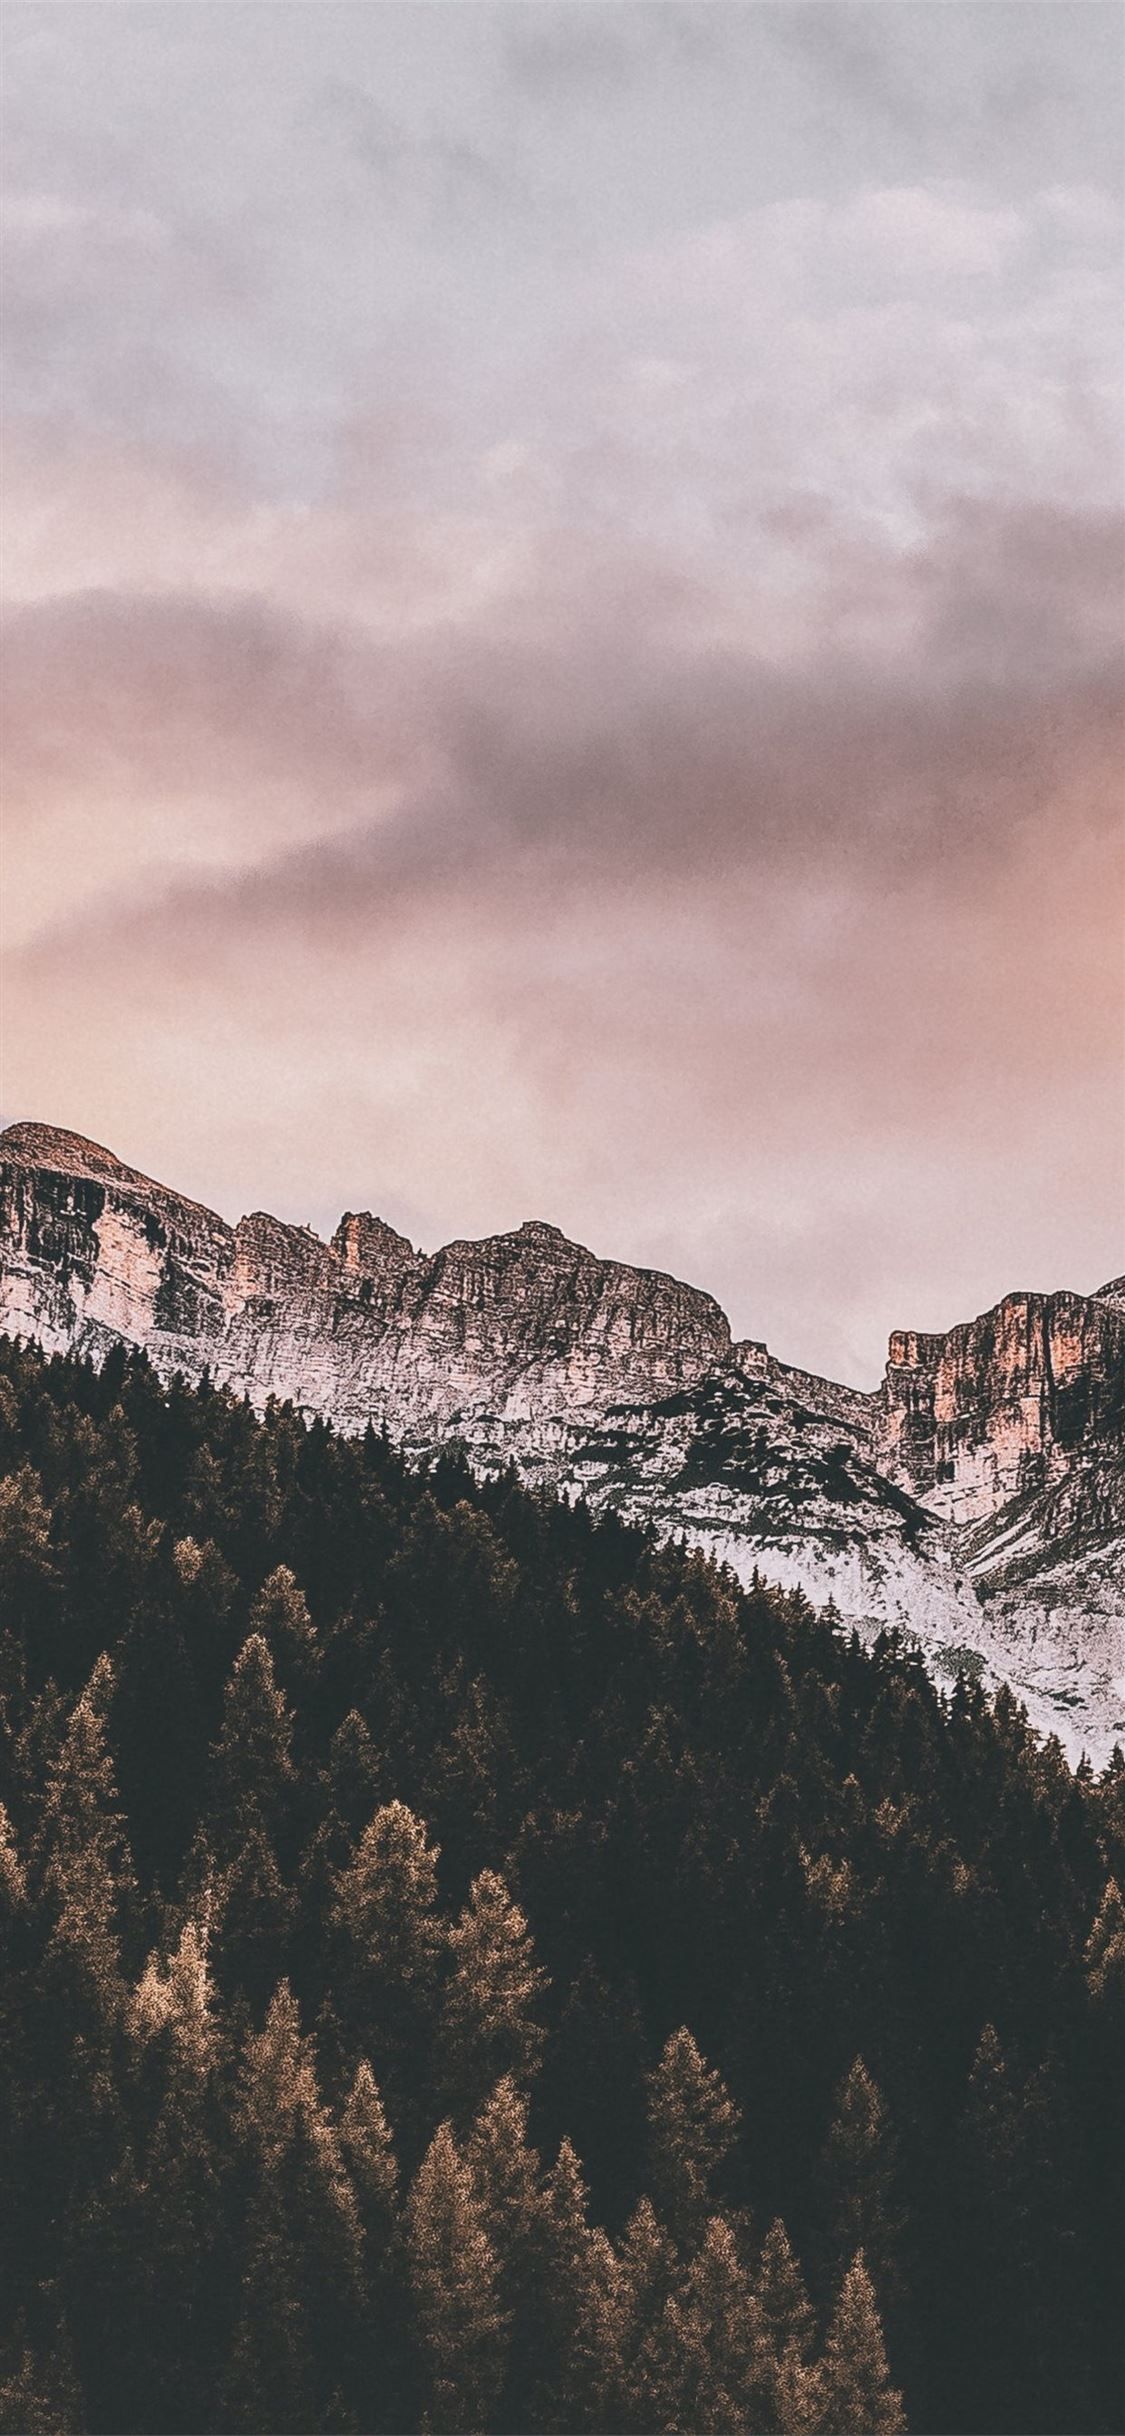 daylight rocky mountain landscape iPhone X Wallpaper Free Download